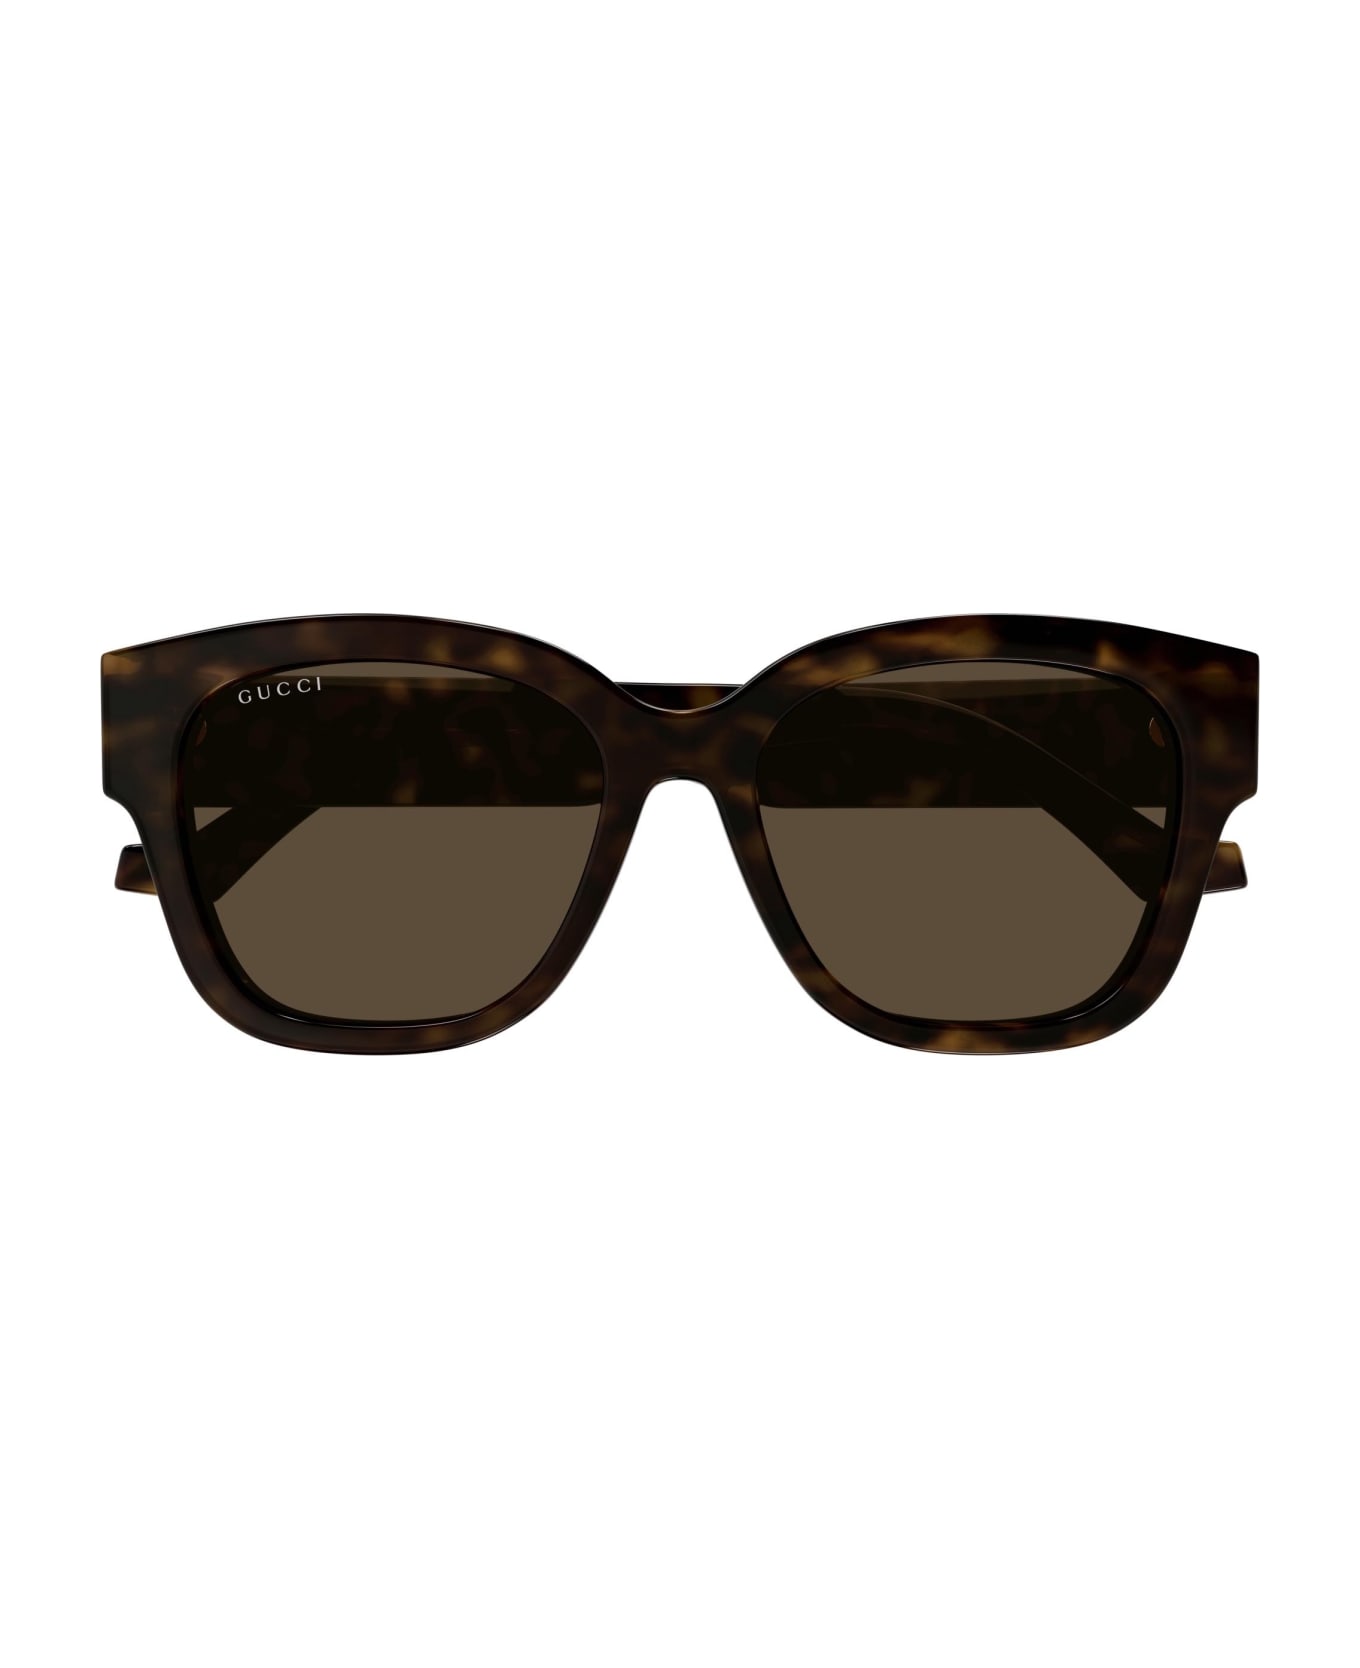 Gucci Eyewear Sunglasses - Marrone/Marrone サングラス